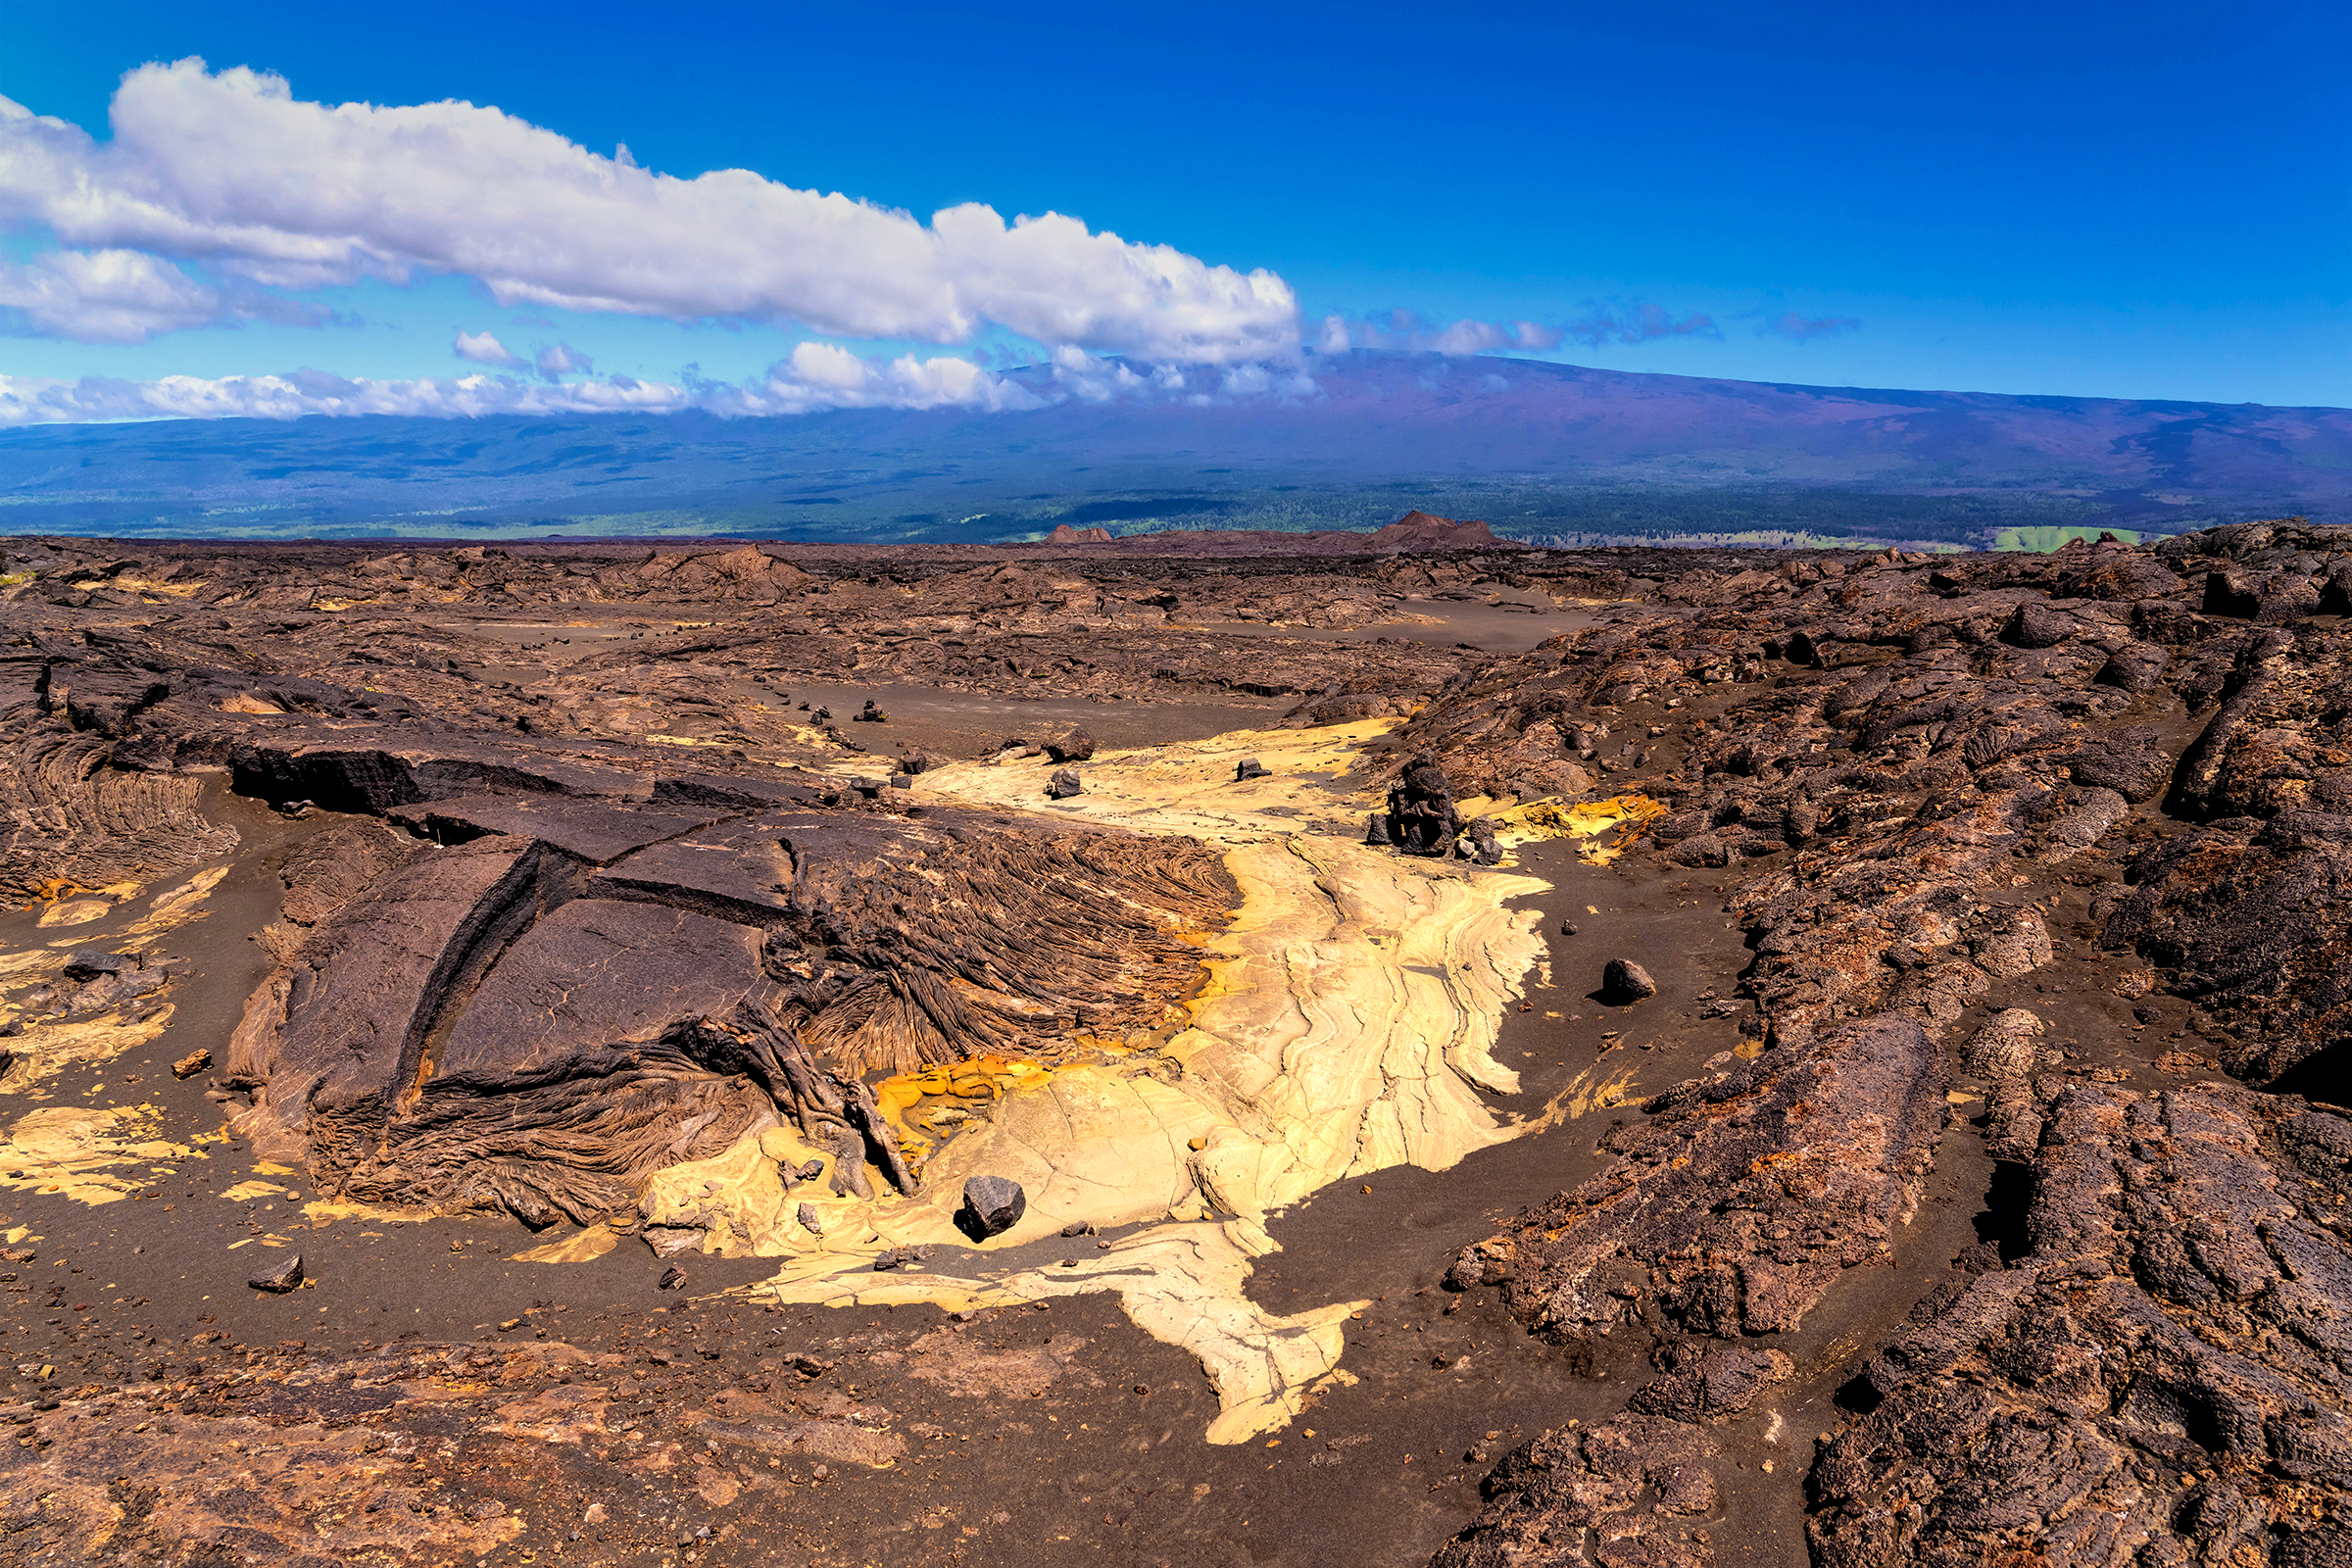 A remote desert trail amidst a lava rock landscape